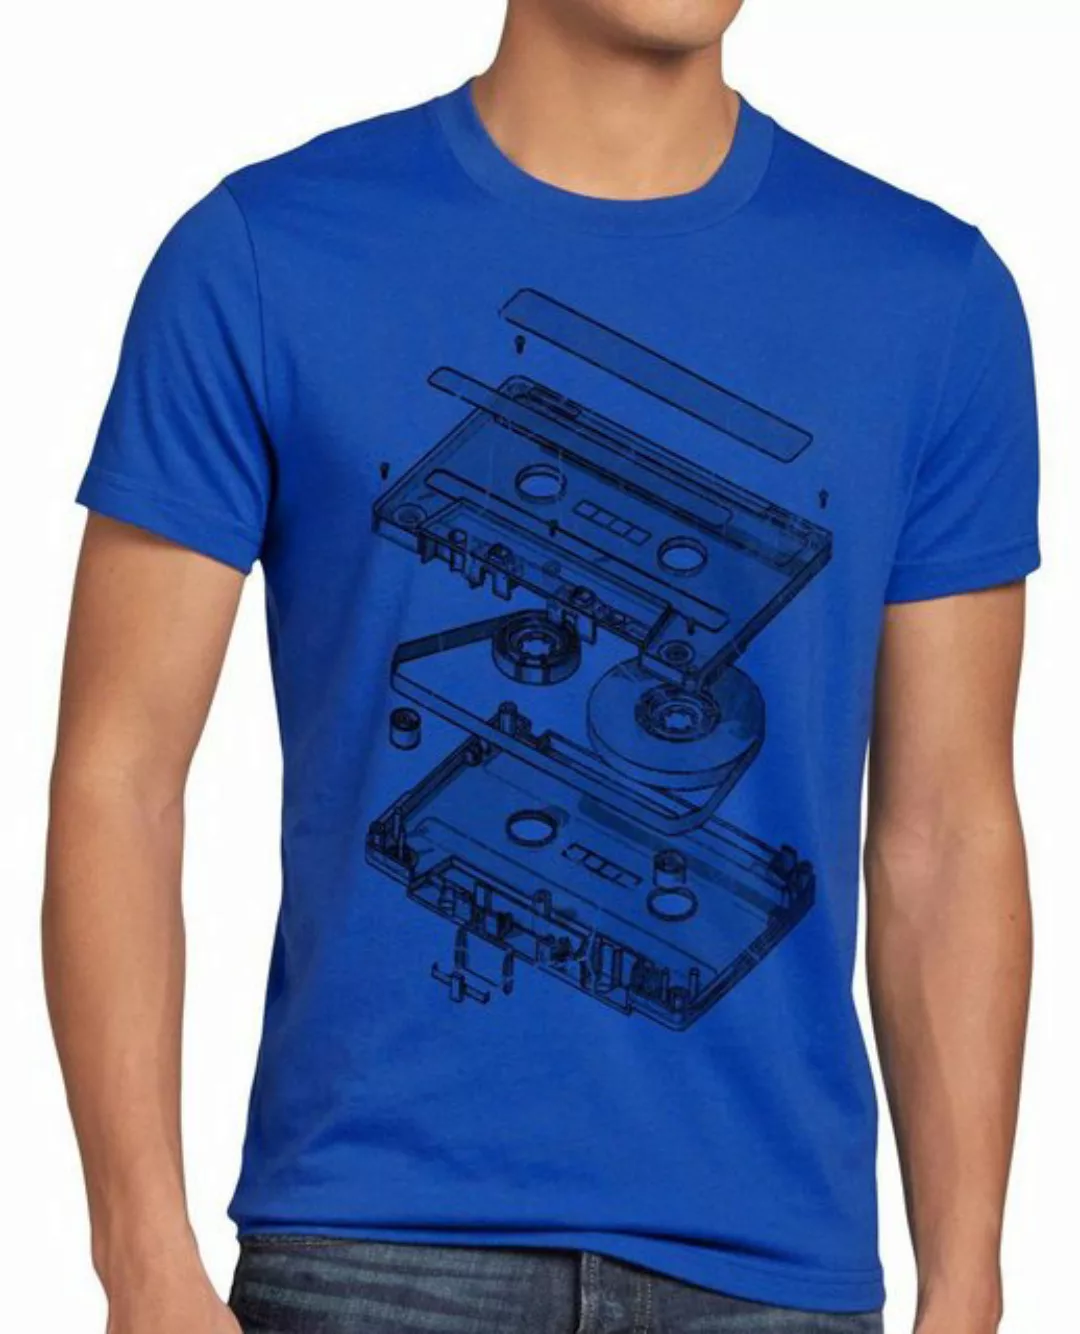 style3 Print-Shirt Herren T-Shirt Tape Kassette mc dj 3D turntable ndw anal günstig online kaufen